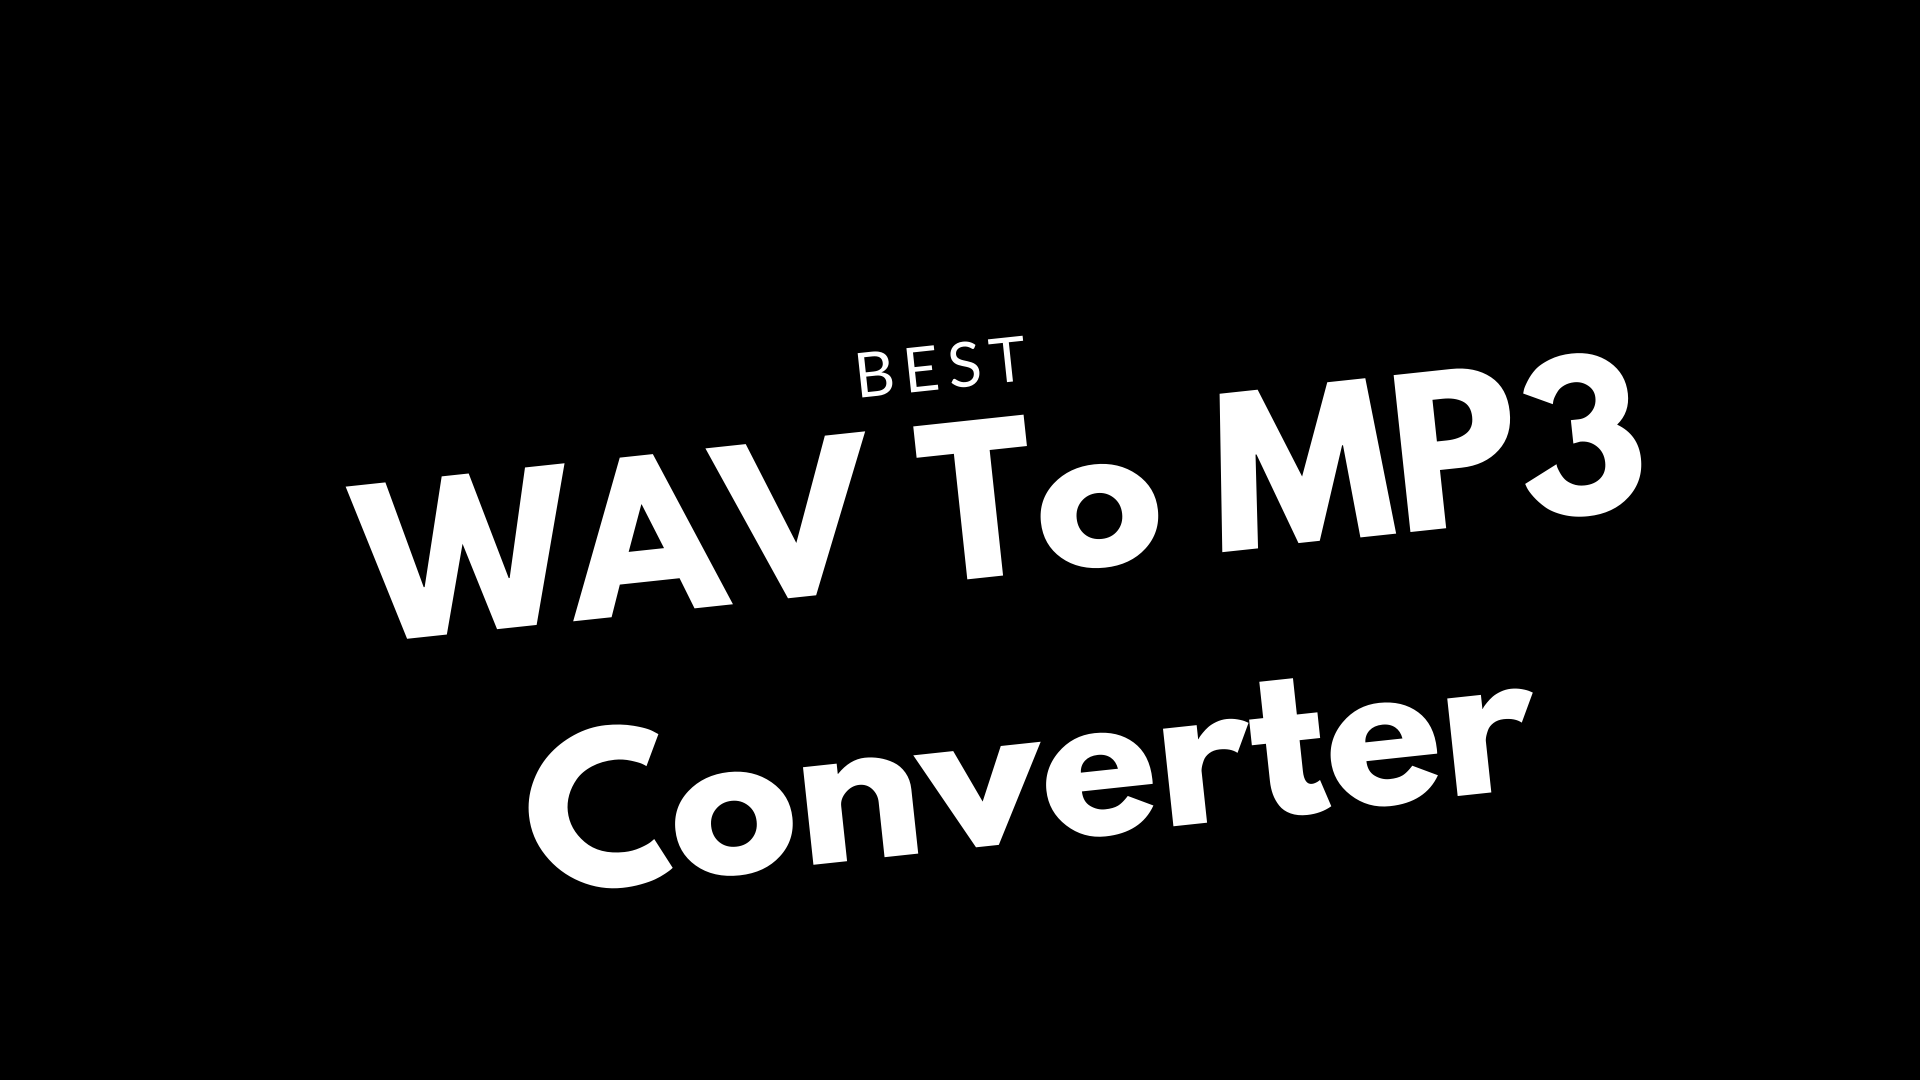 best youtube to mp3 converter for mac reddit